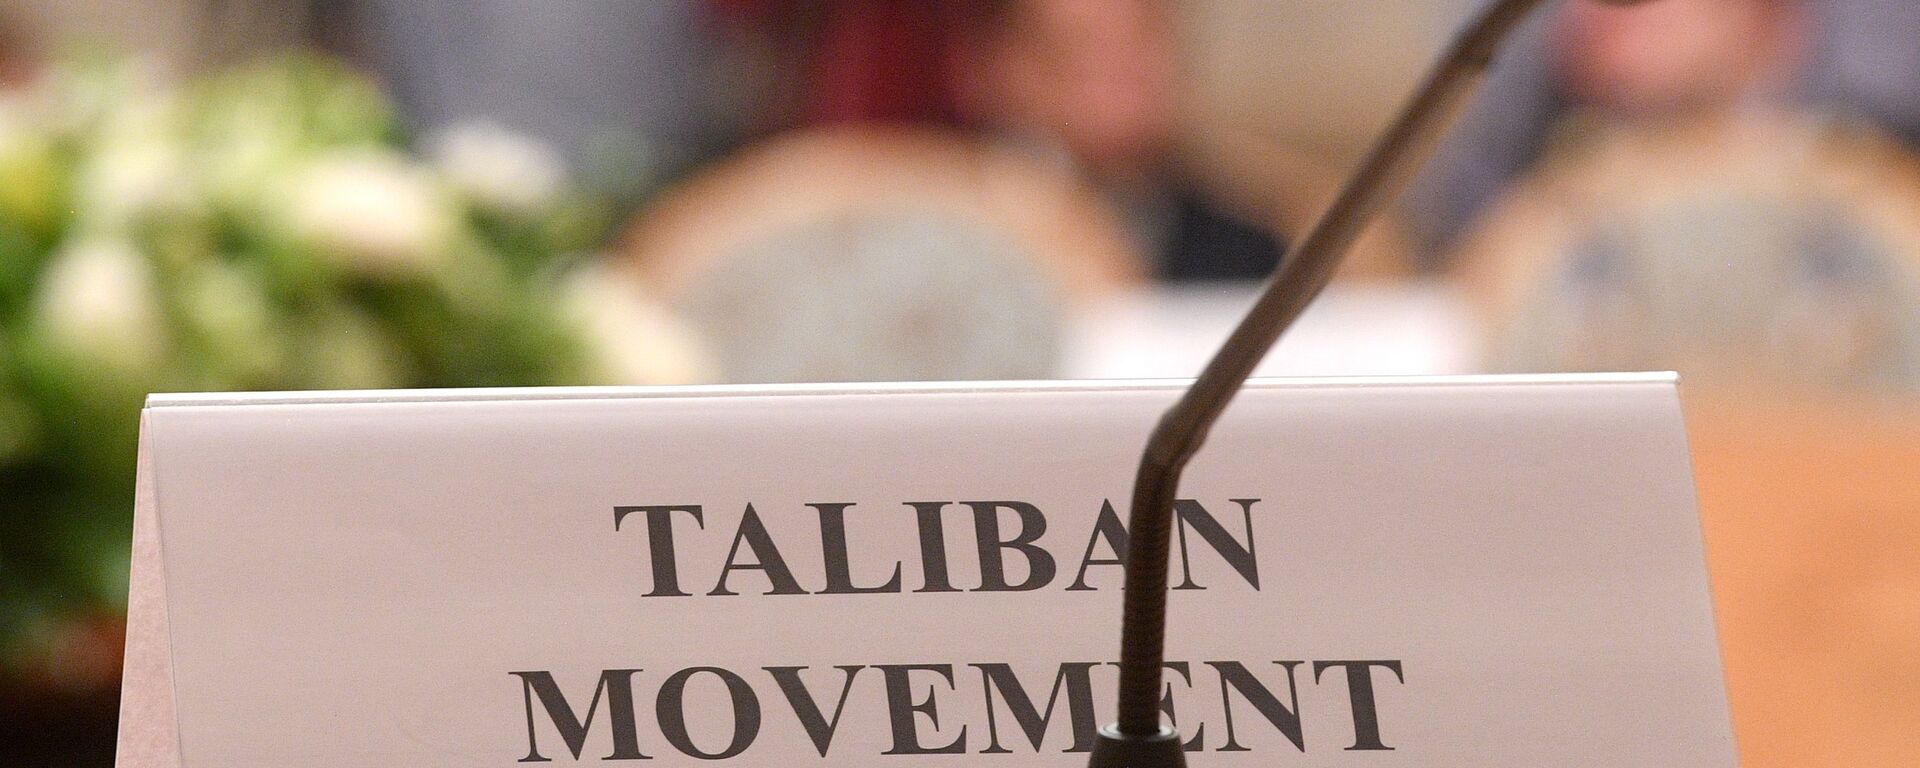 Табличка на столе представителей движения Талибан  - Sputnik Ўзбекистон, 1920, 09.07.2021